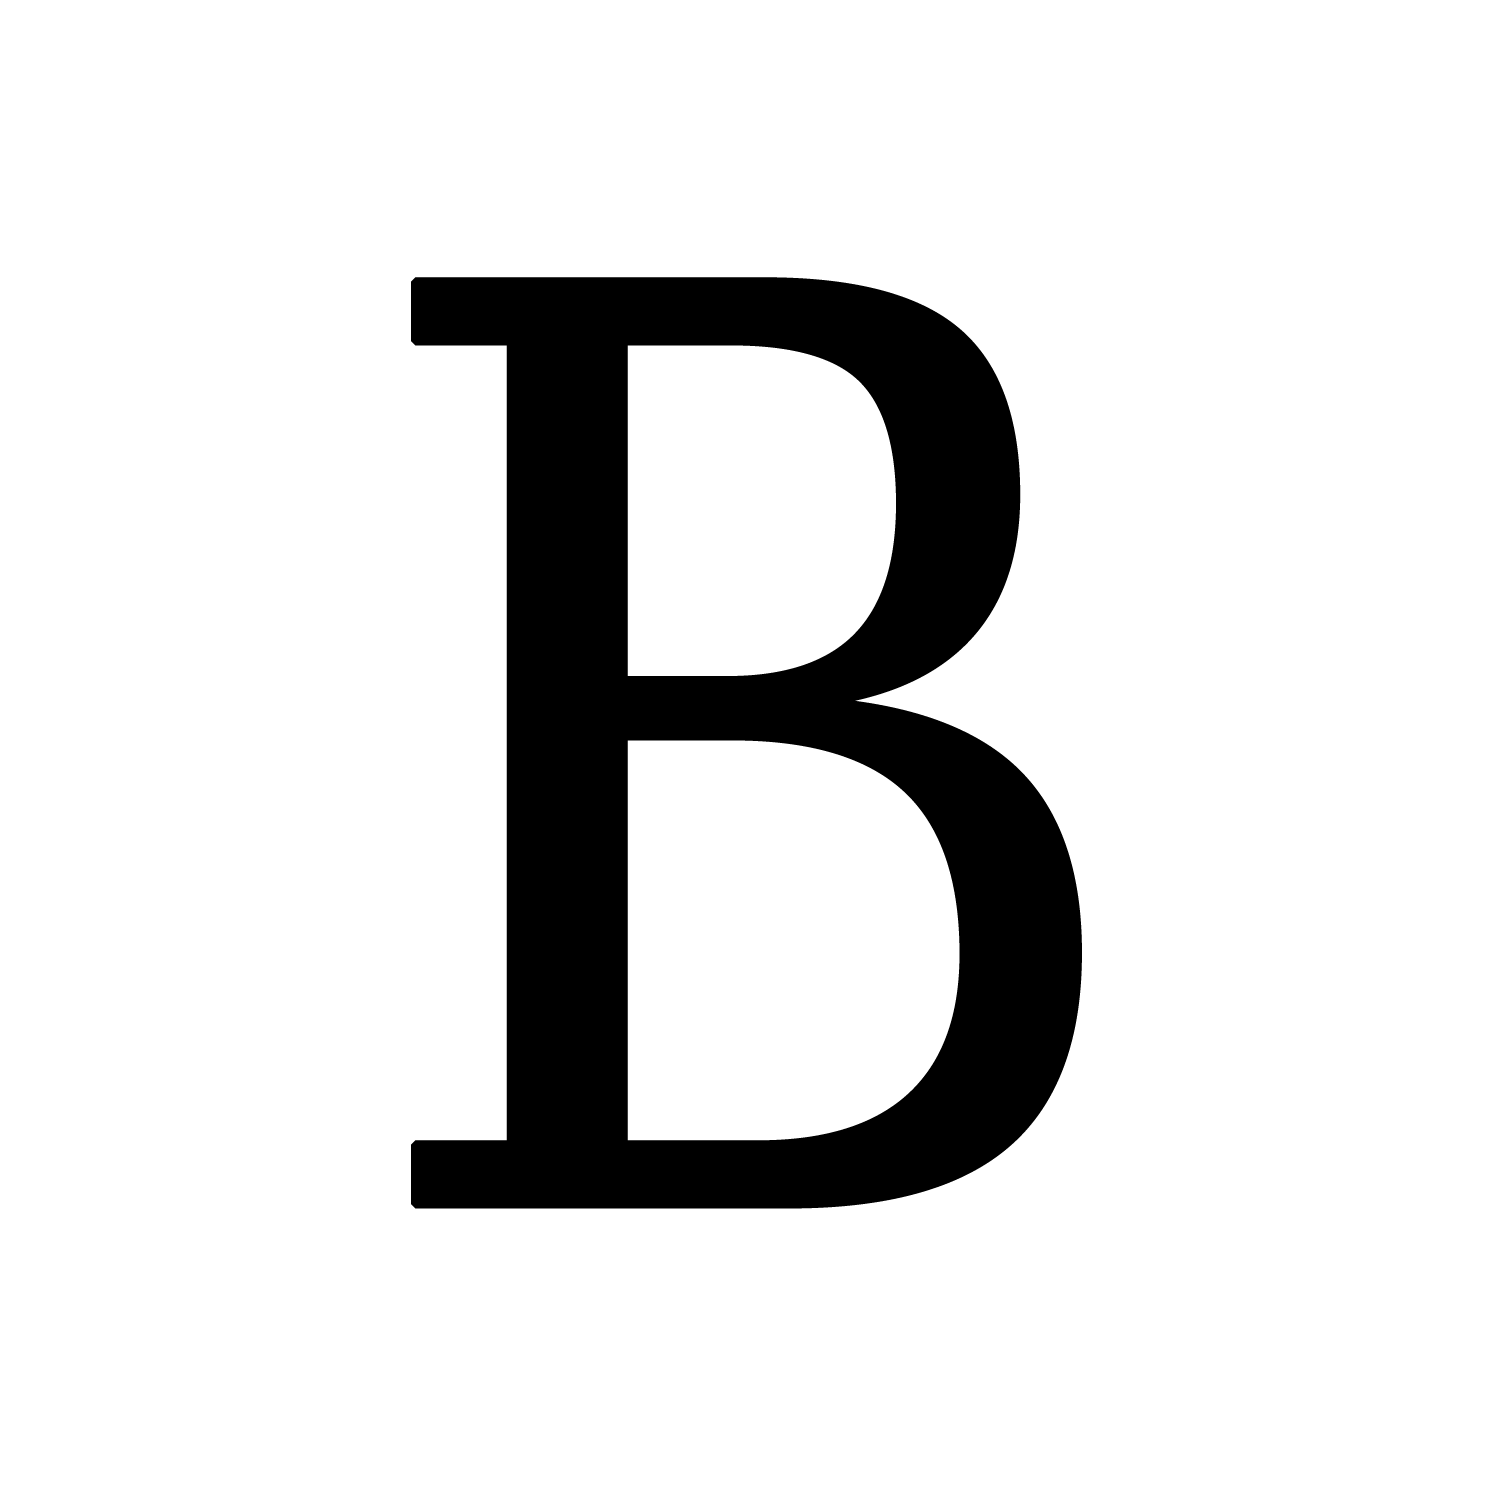 Letter B with Crown Logo - letter b png - Hobit.fullring.co